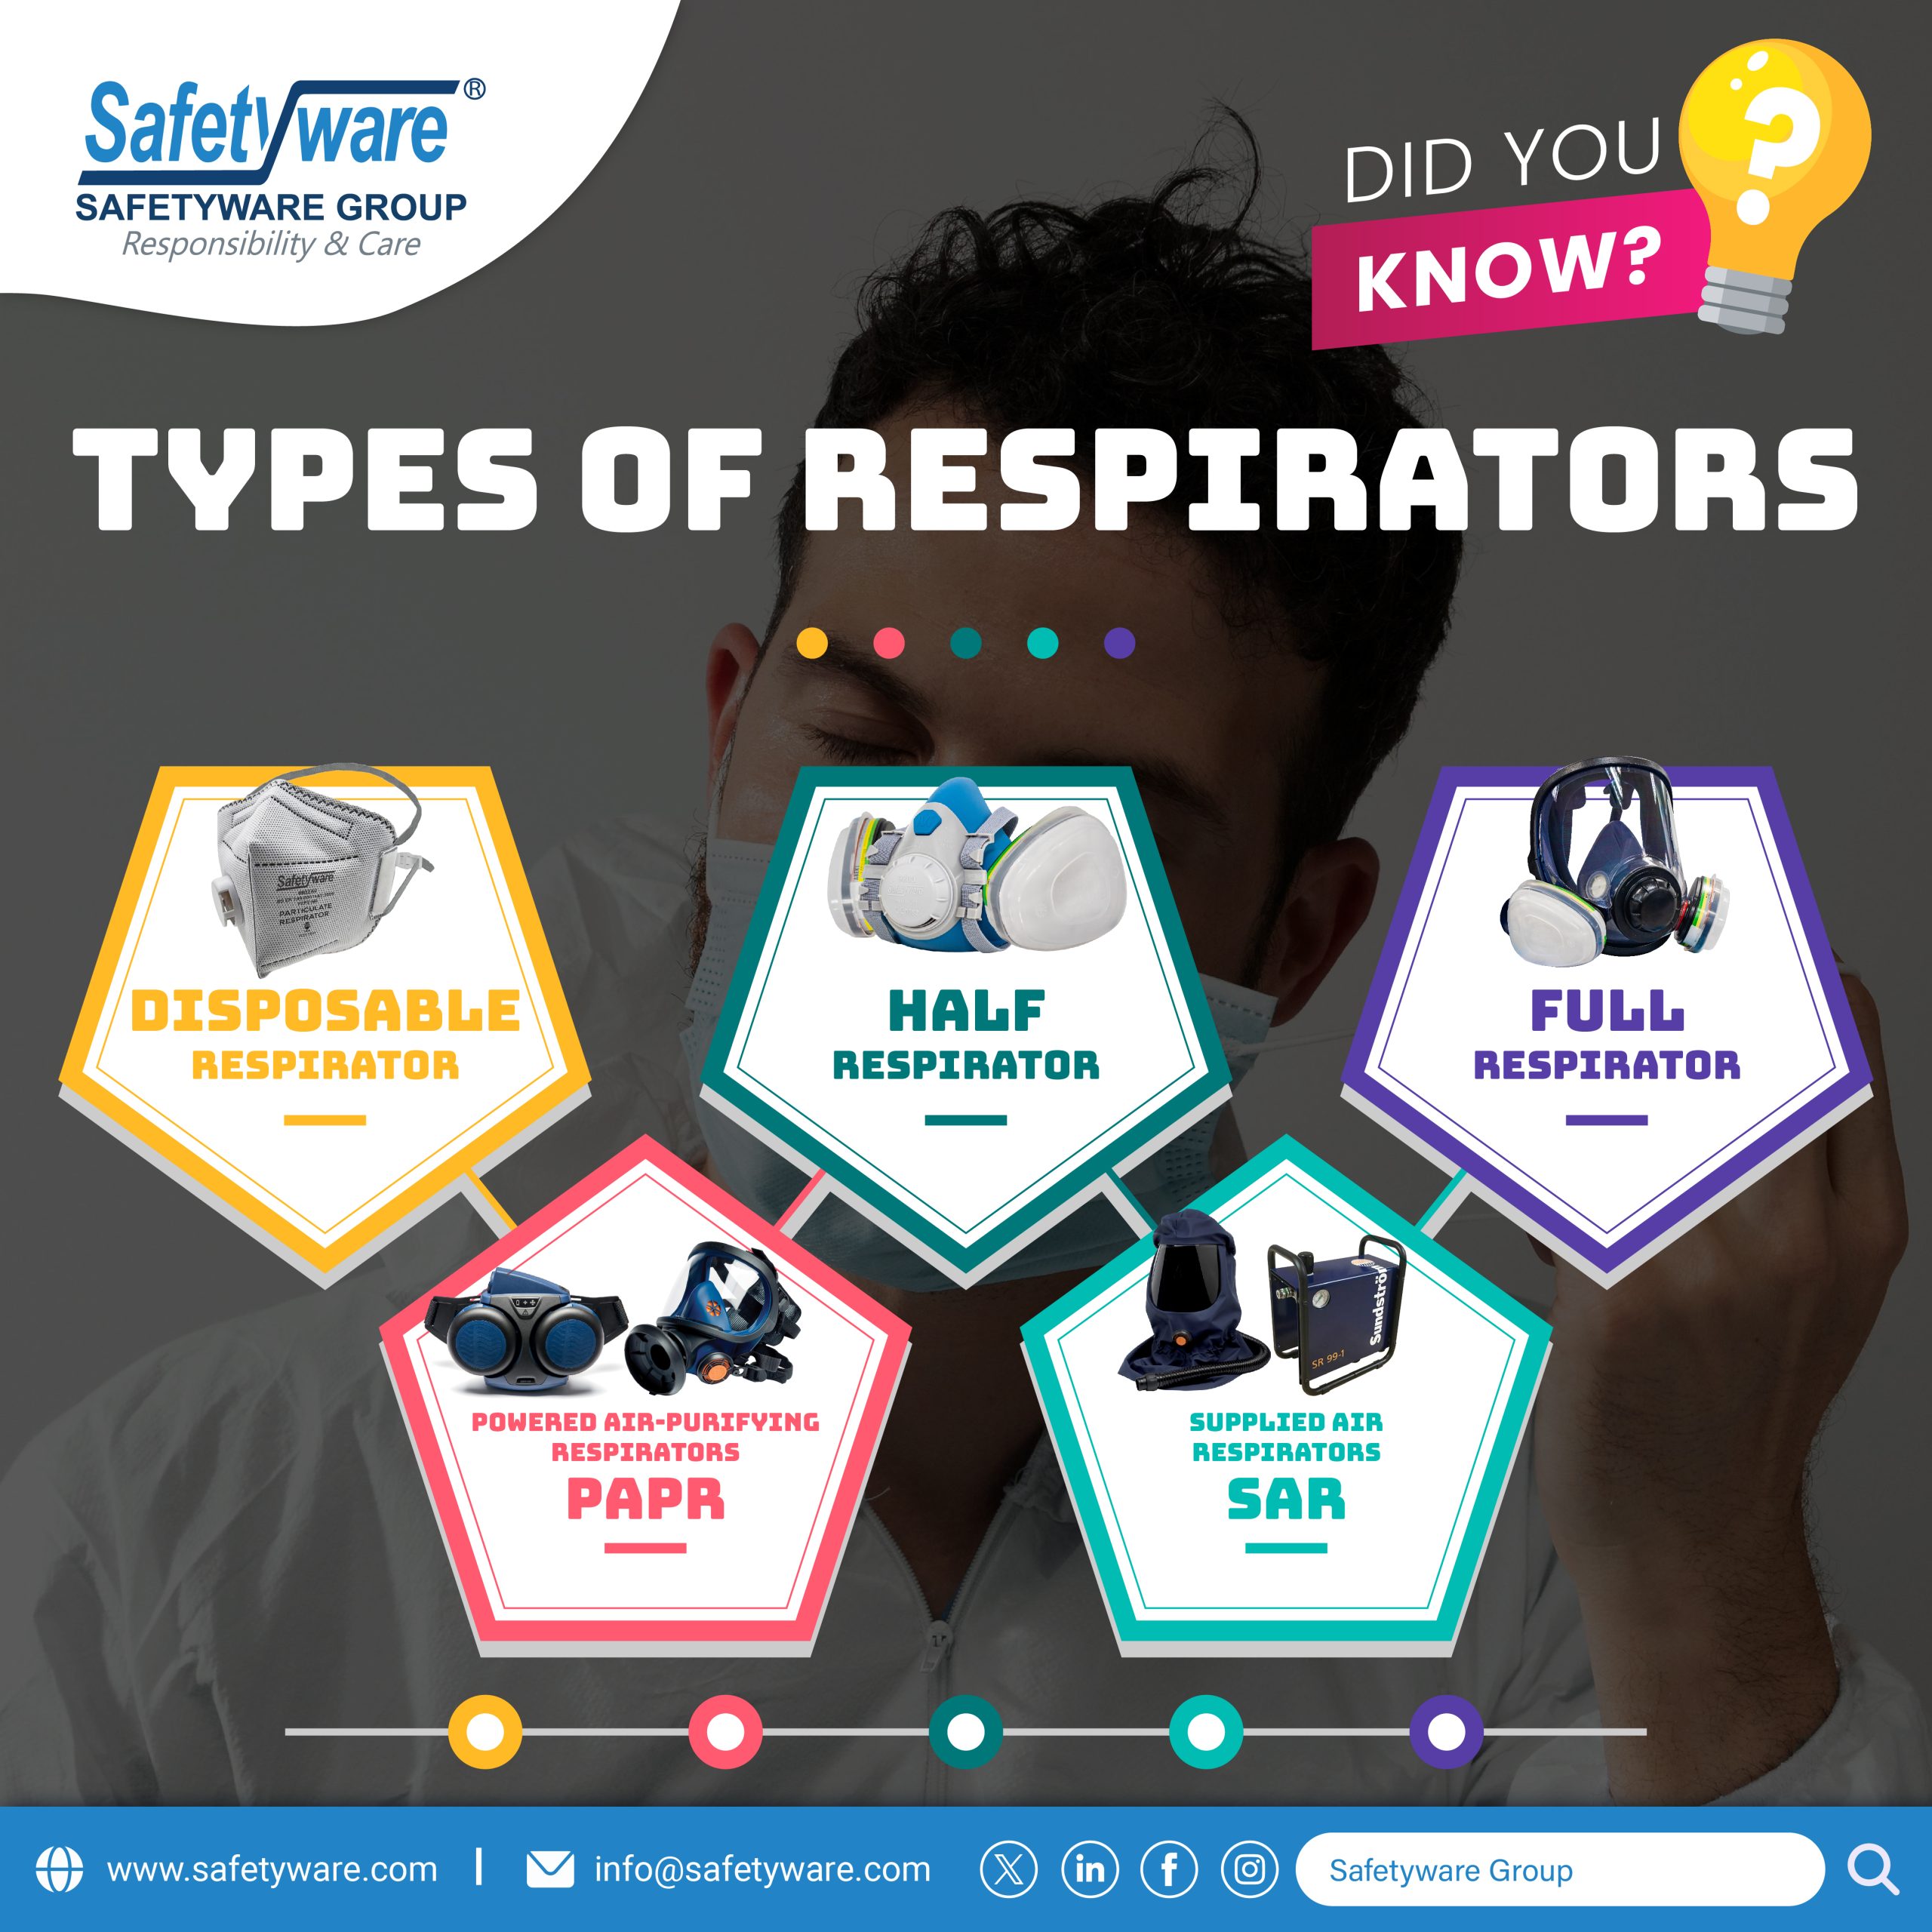 Type of Respirators